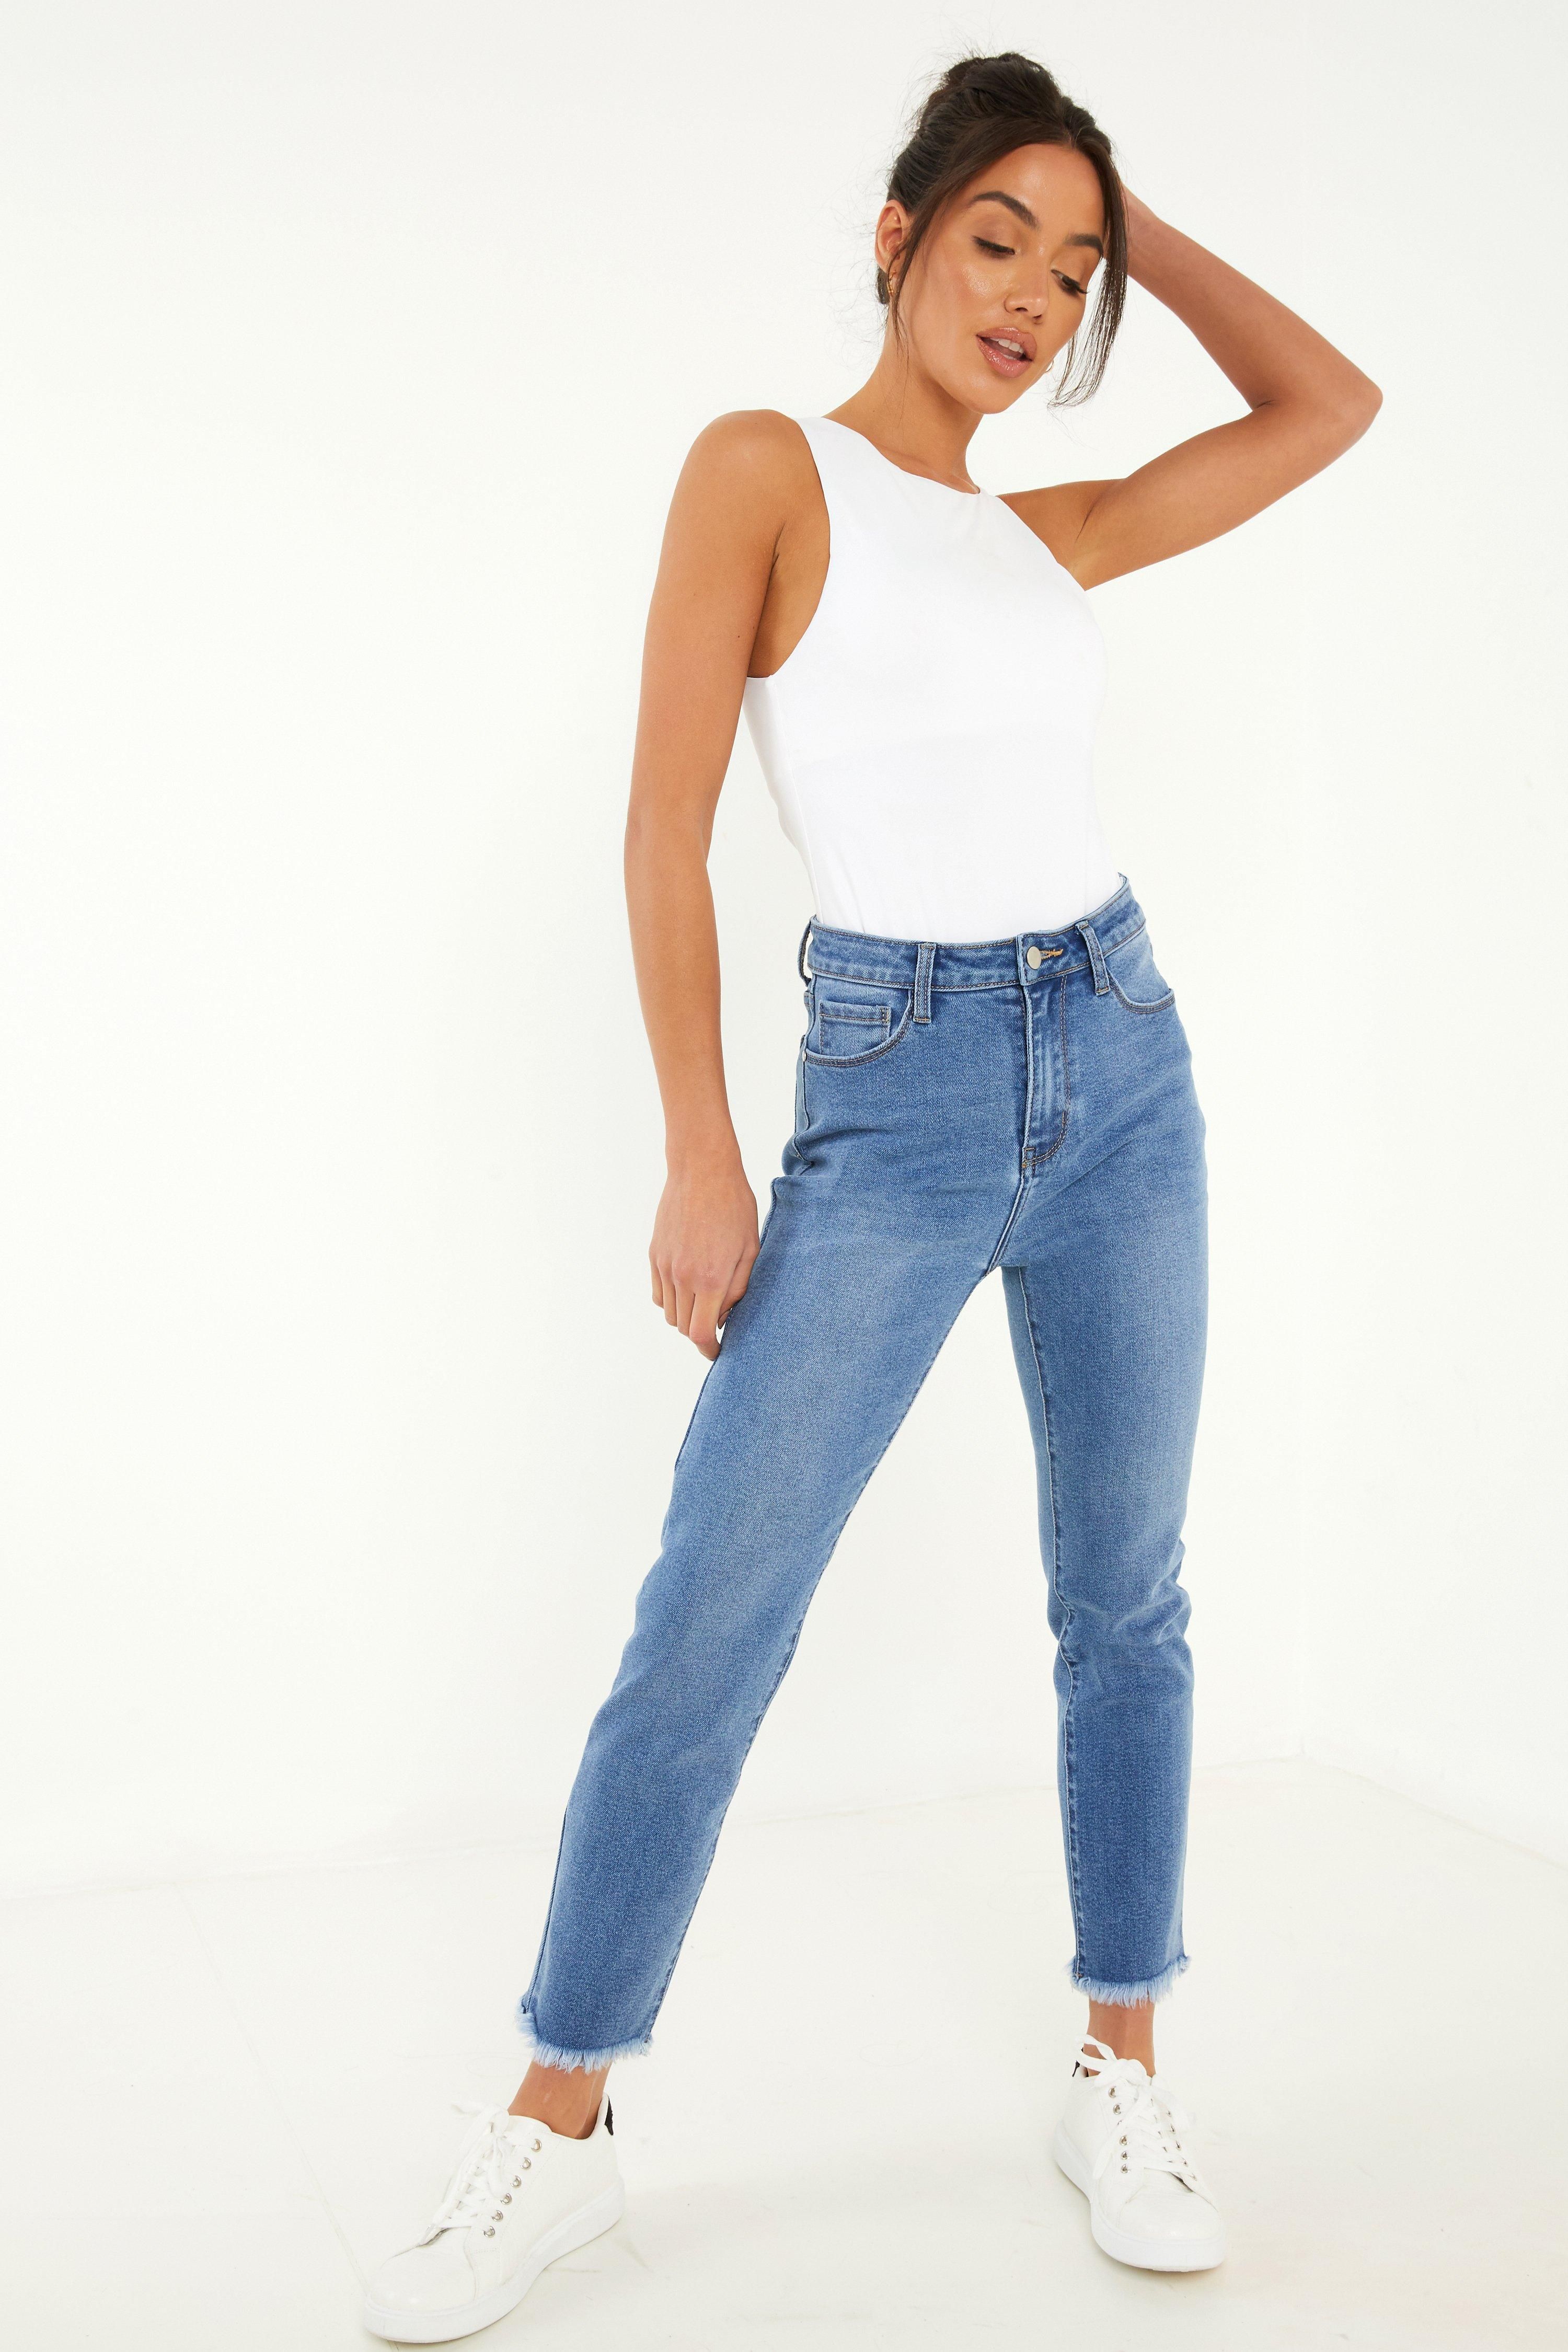 - Denim jeans   - Frayed hem  - High waist  - Stretch style   - Model Height: 5' 9